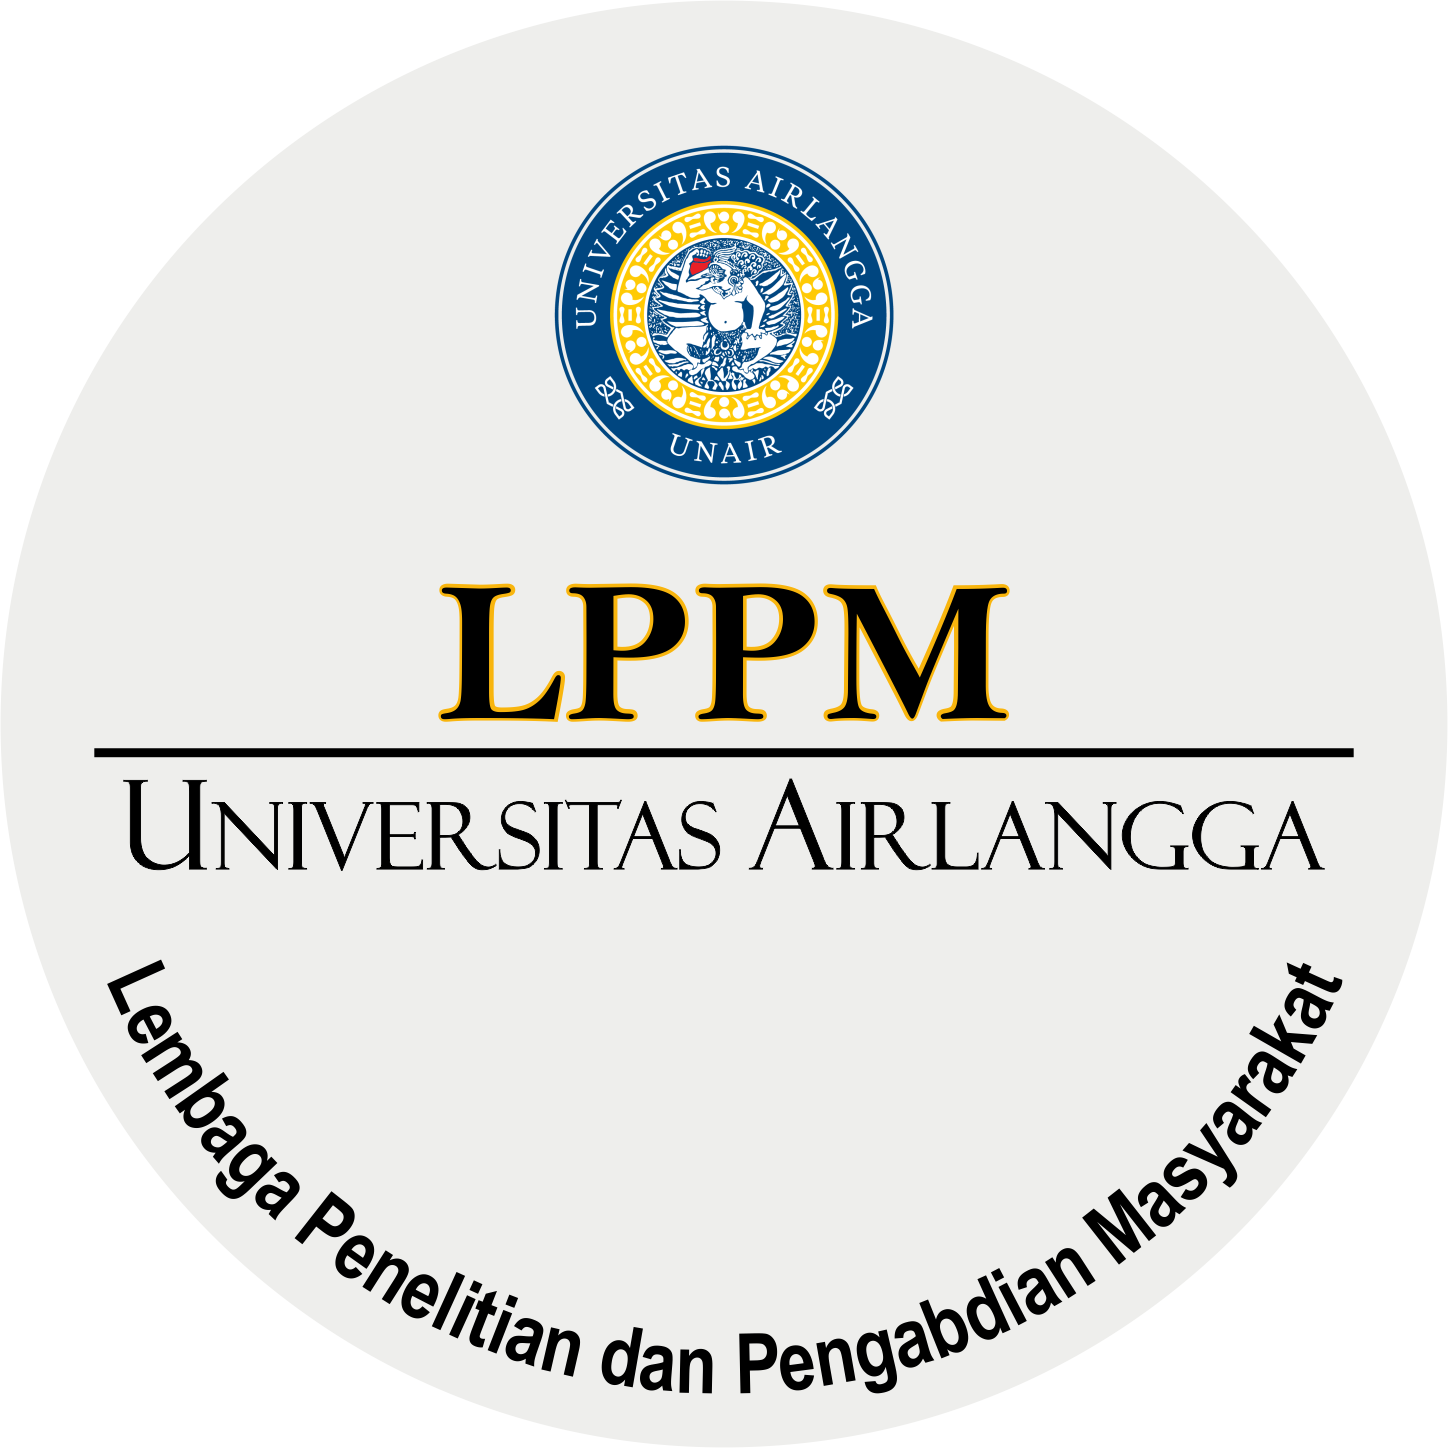 LPPM UNAIR : Instutute for Research & Community Service Universitas Airlangga. The Next Mandate, October 2020.